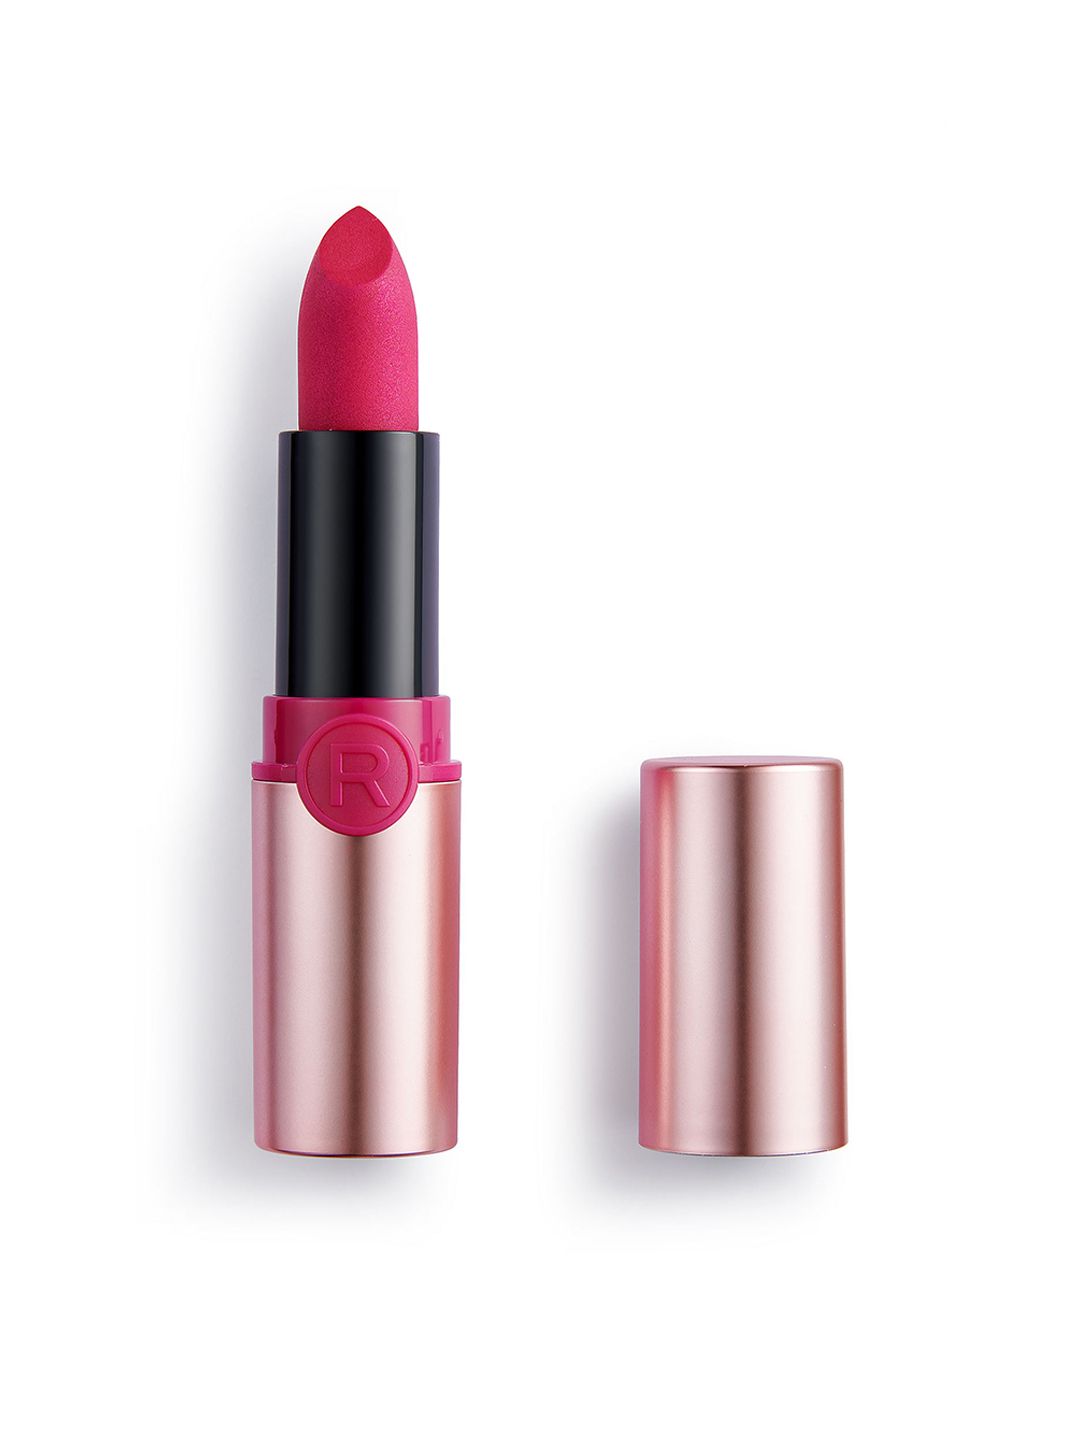 Makeup Revolution London Powder Matte Lipstick - Lust Price in India